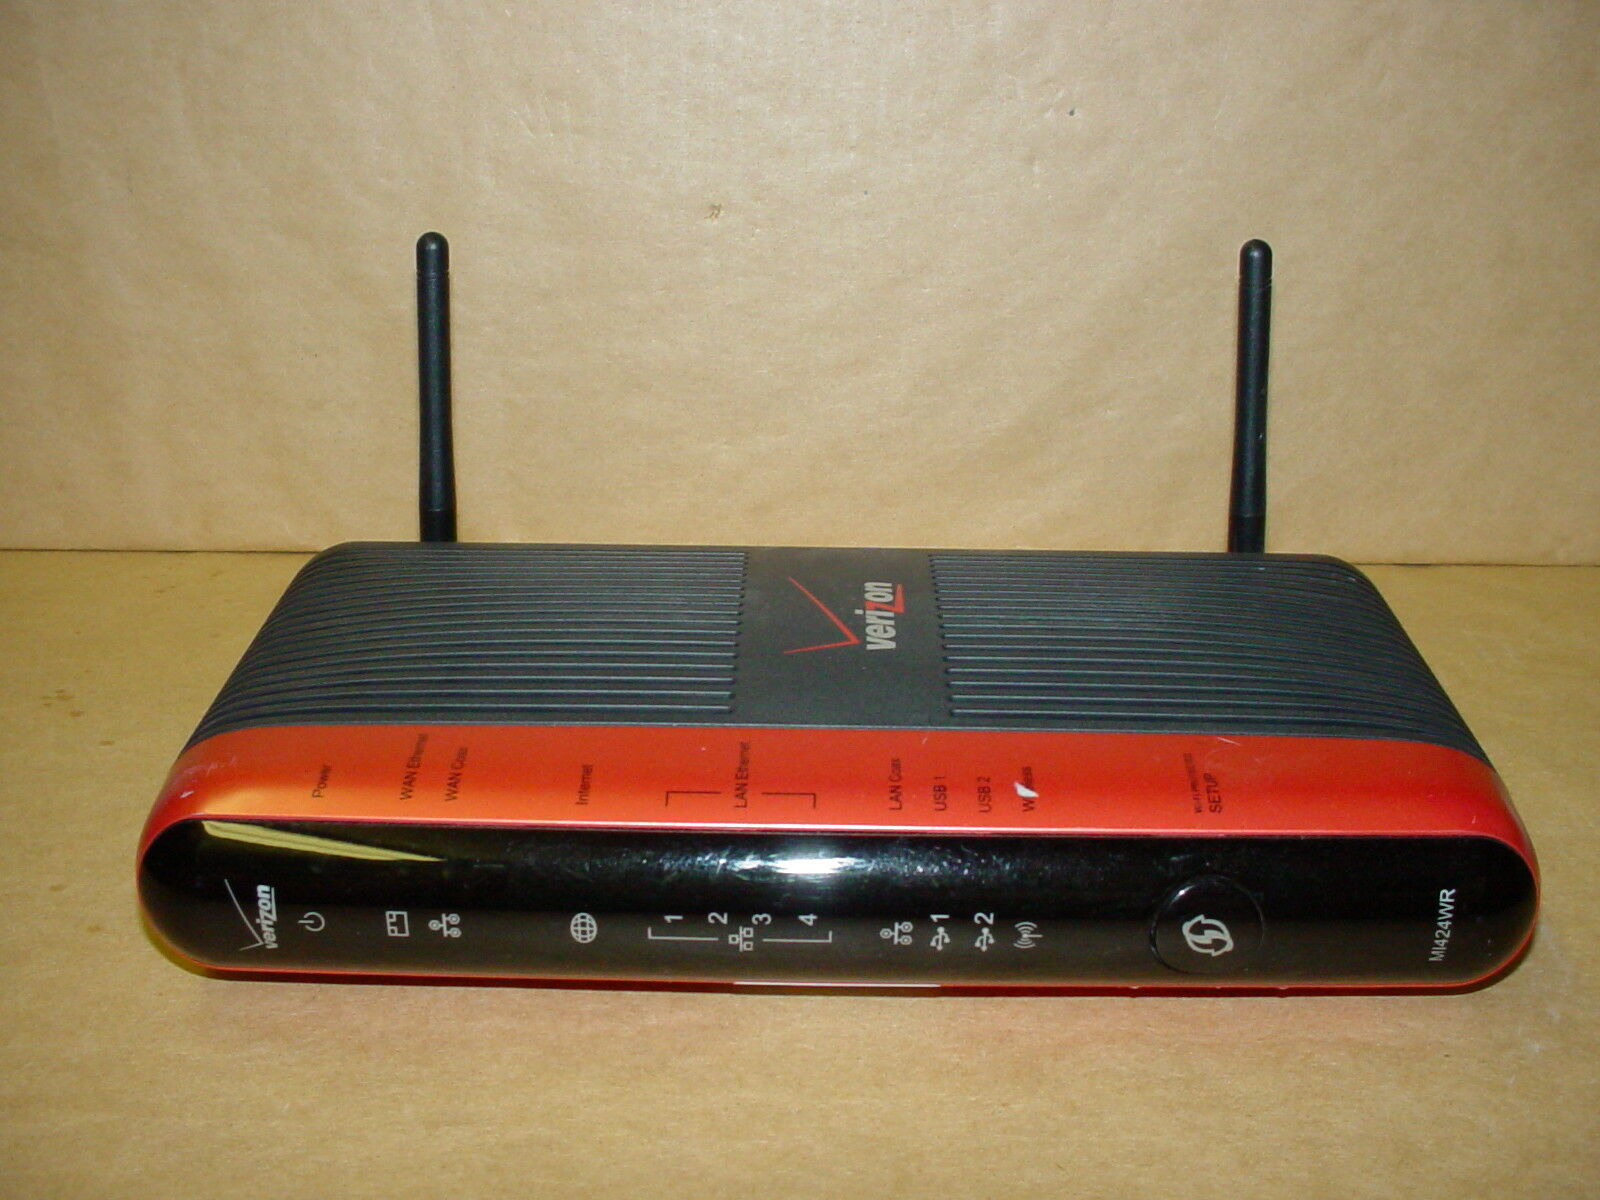 VERIZON M1424WR Rev 1 Actiontec Wireless Router Modem No Ac Adapter eBay